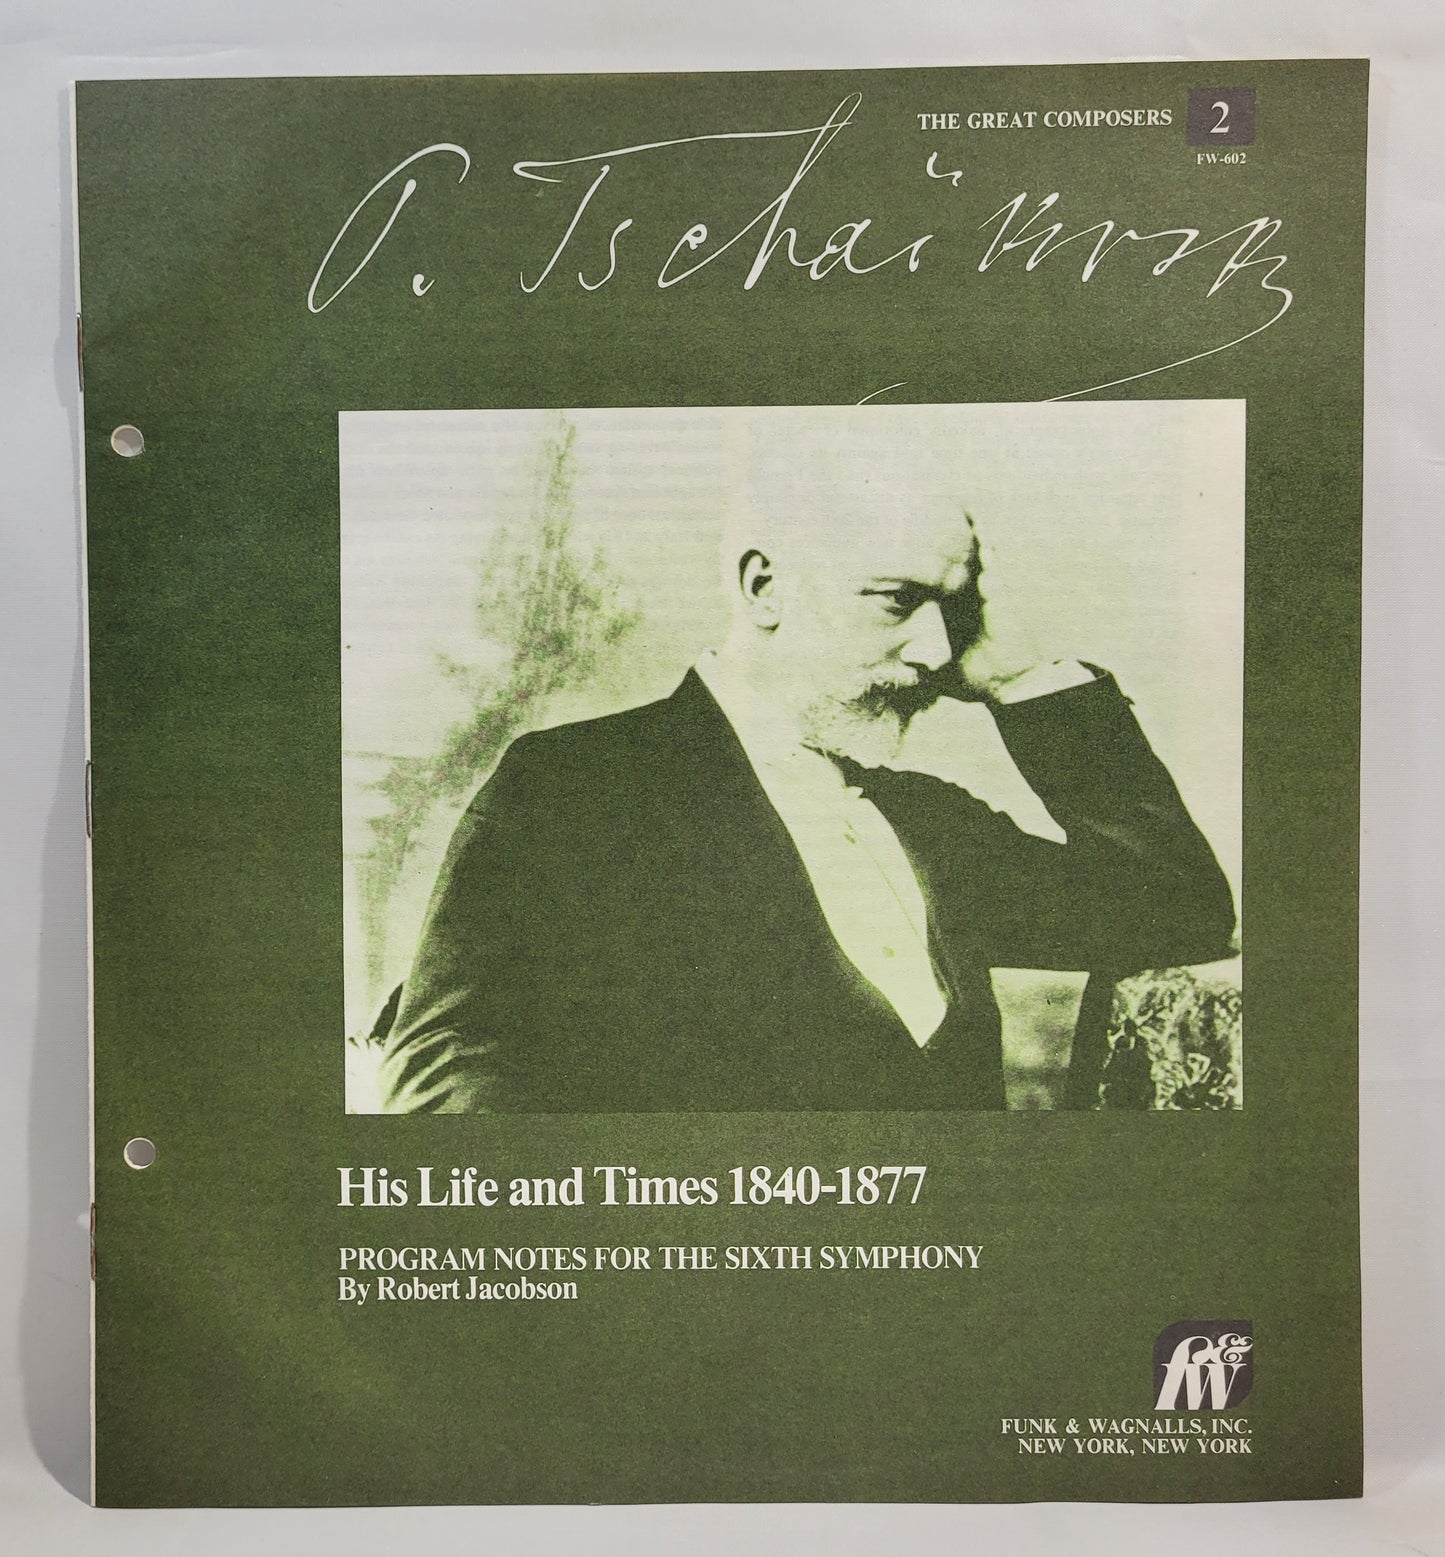 Walter Jürgens - Tchaikovsky - SYmphony No. 5 (Patétique) [Vinyl Record LP]